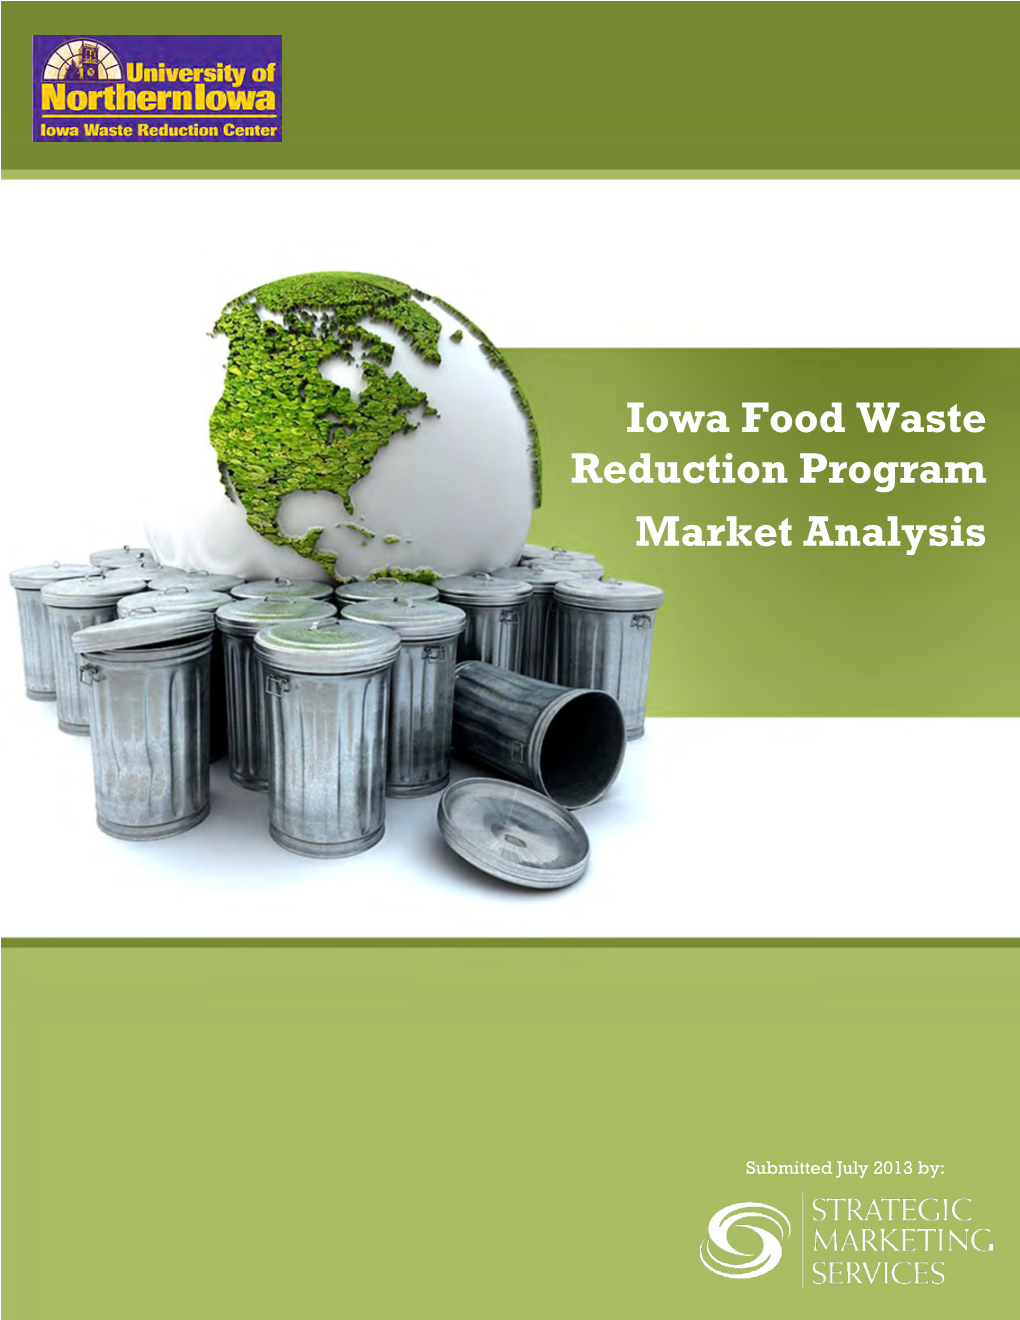 Iowa Food Waste Reduction Program Market Analysis